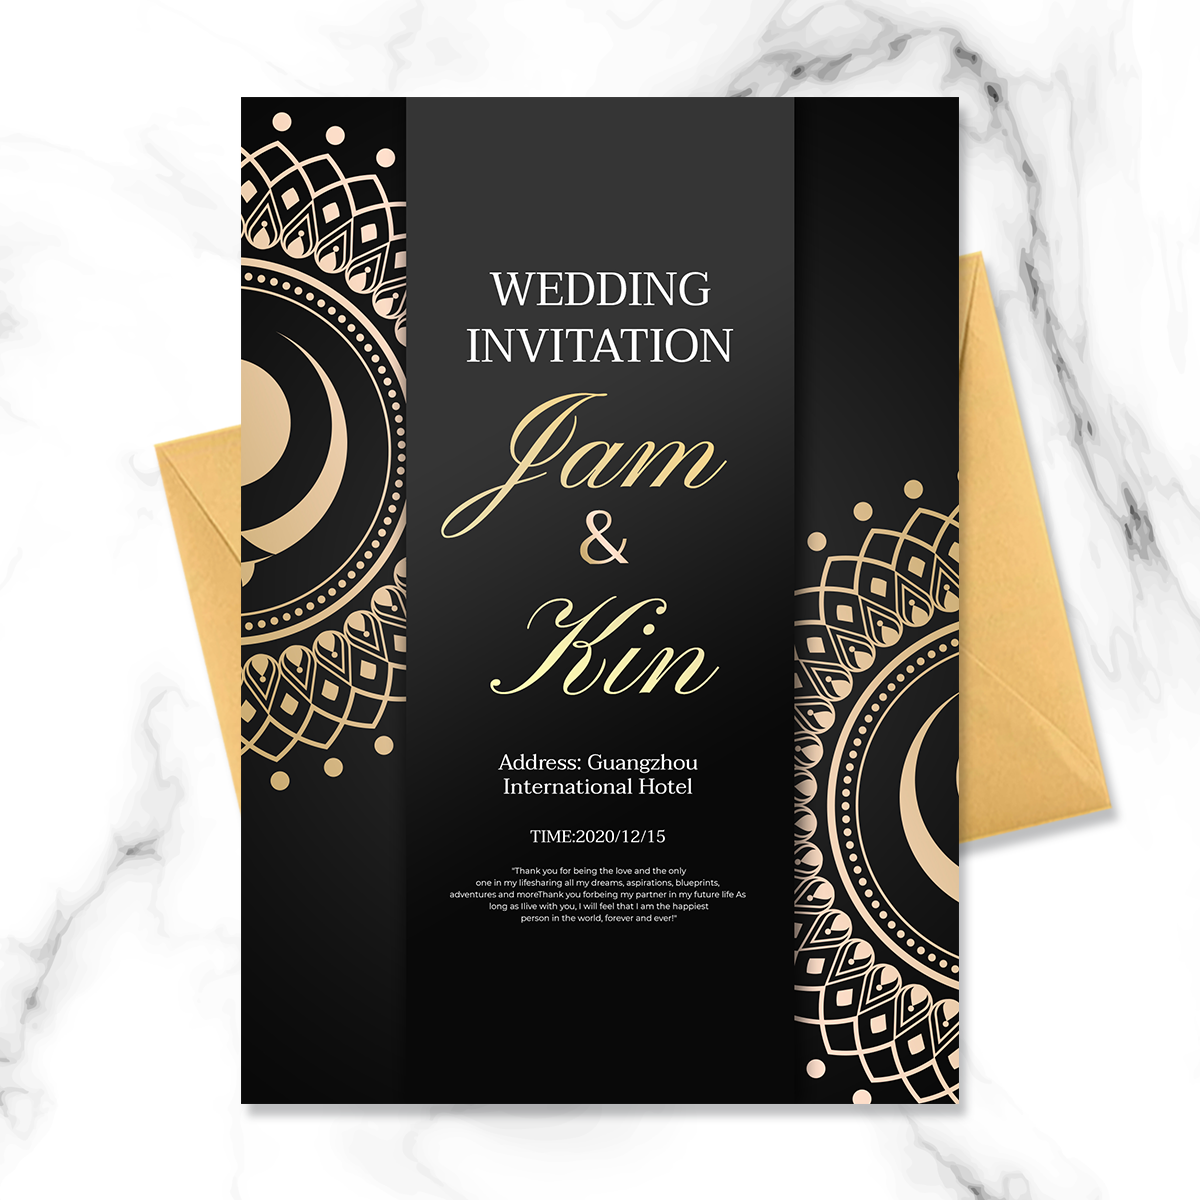 the wedding of my dreams free wedding fonts